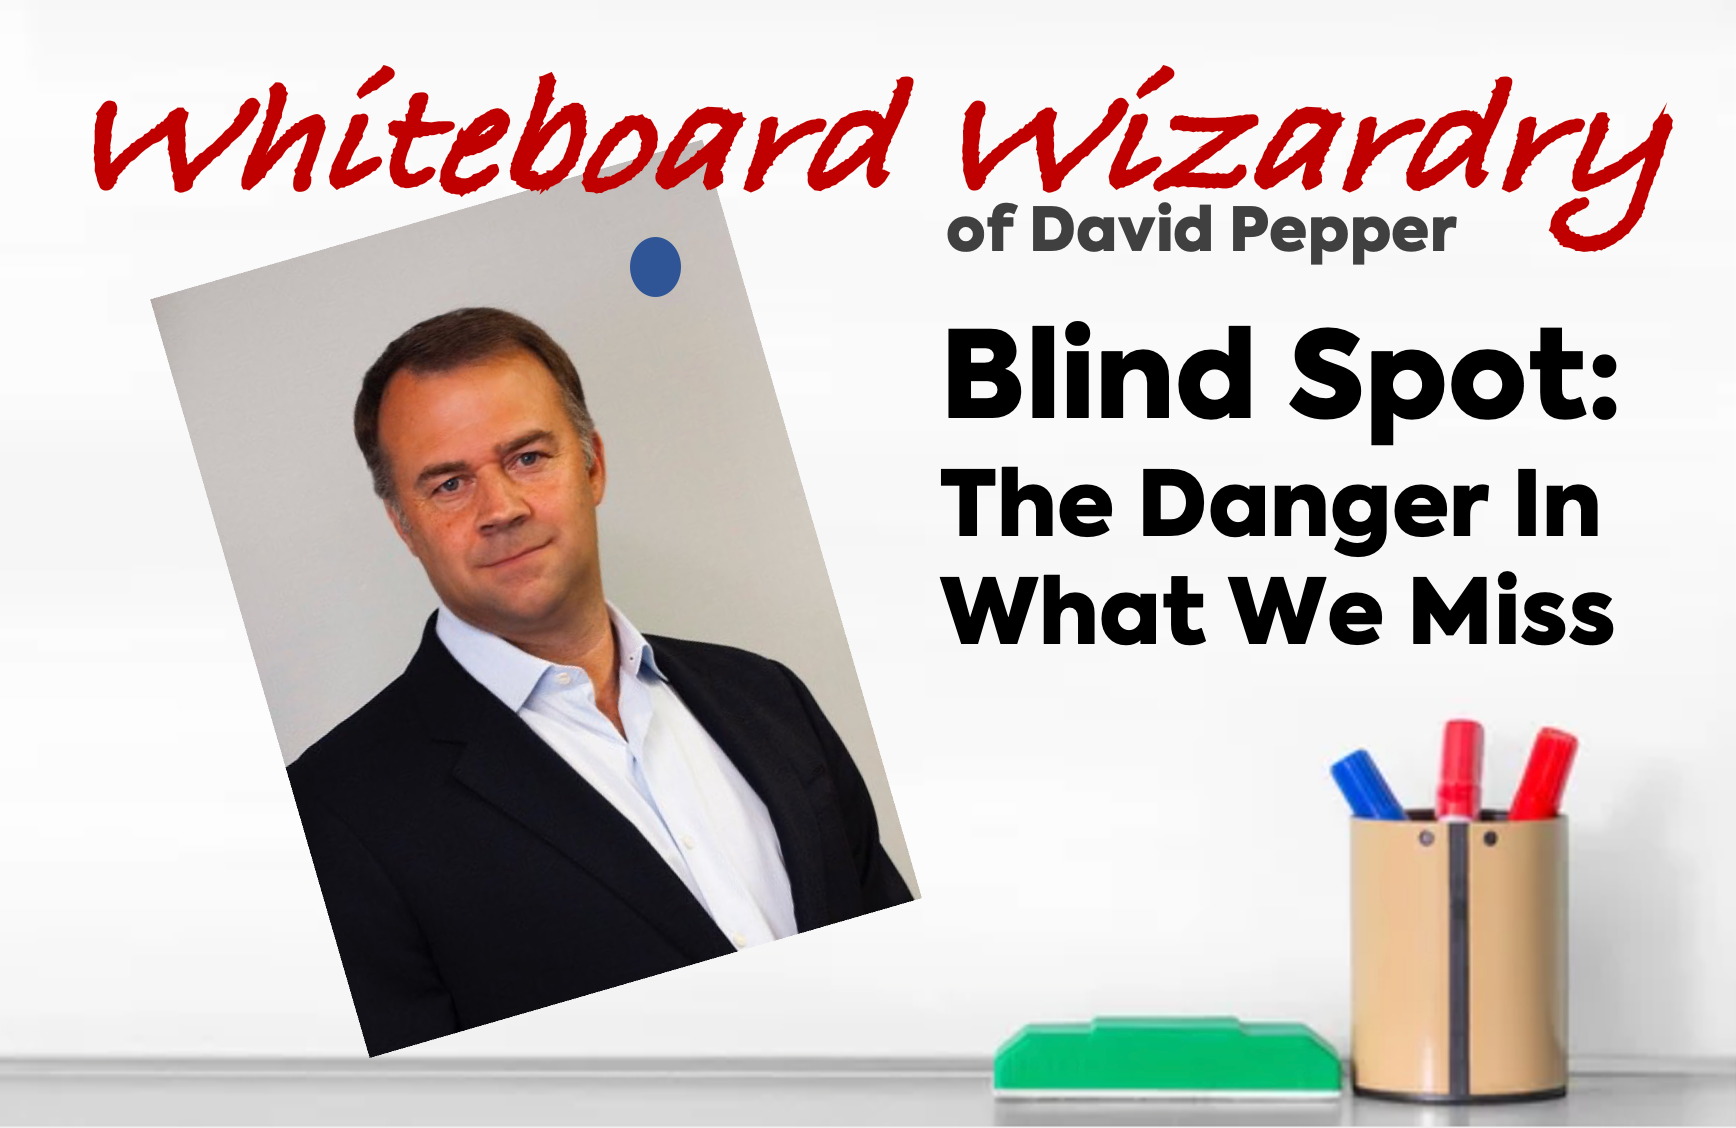 David Pepper White Board Wizard 